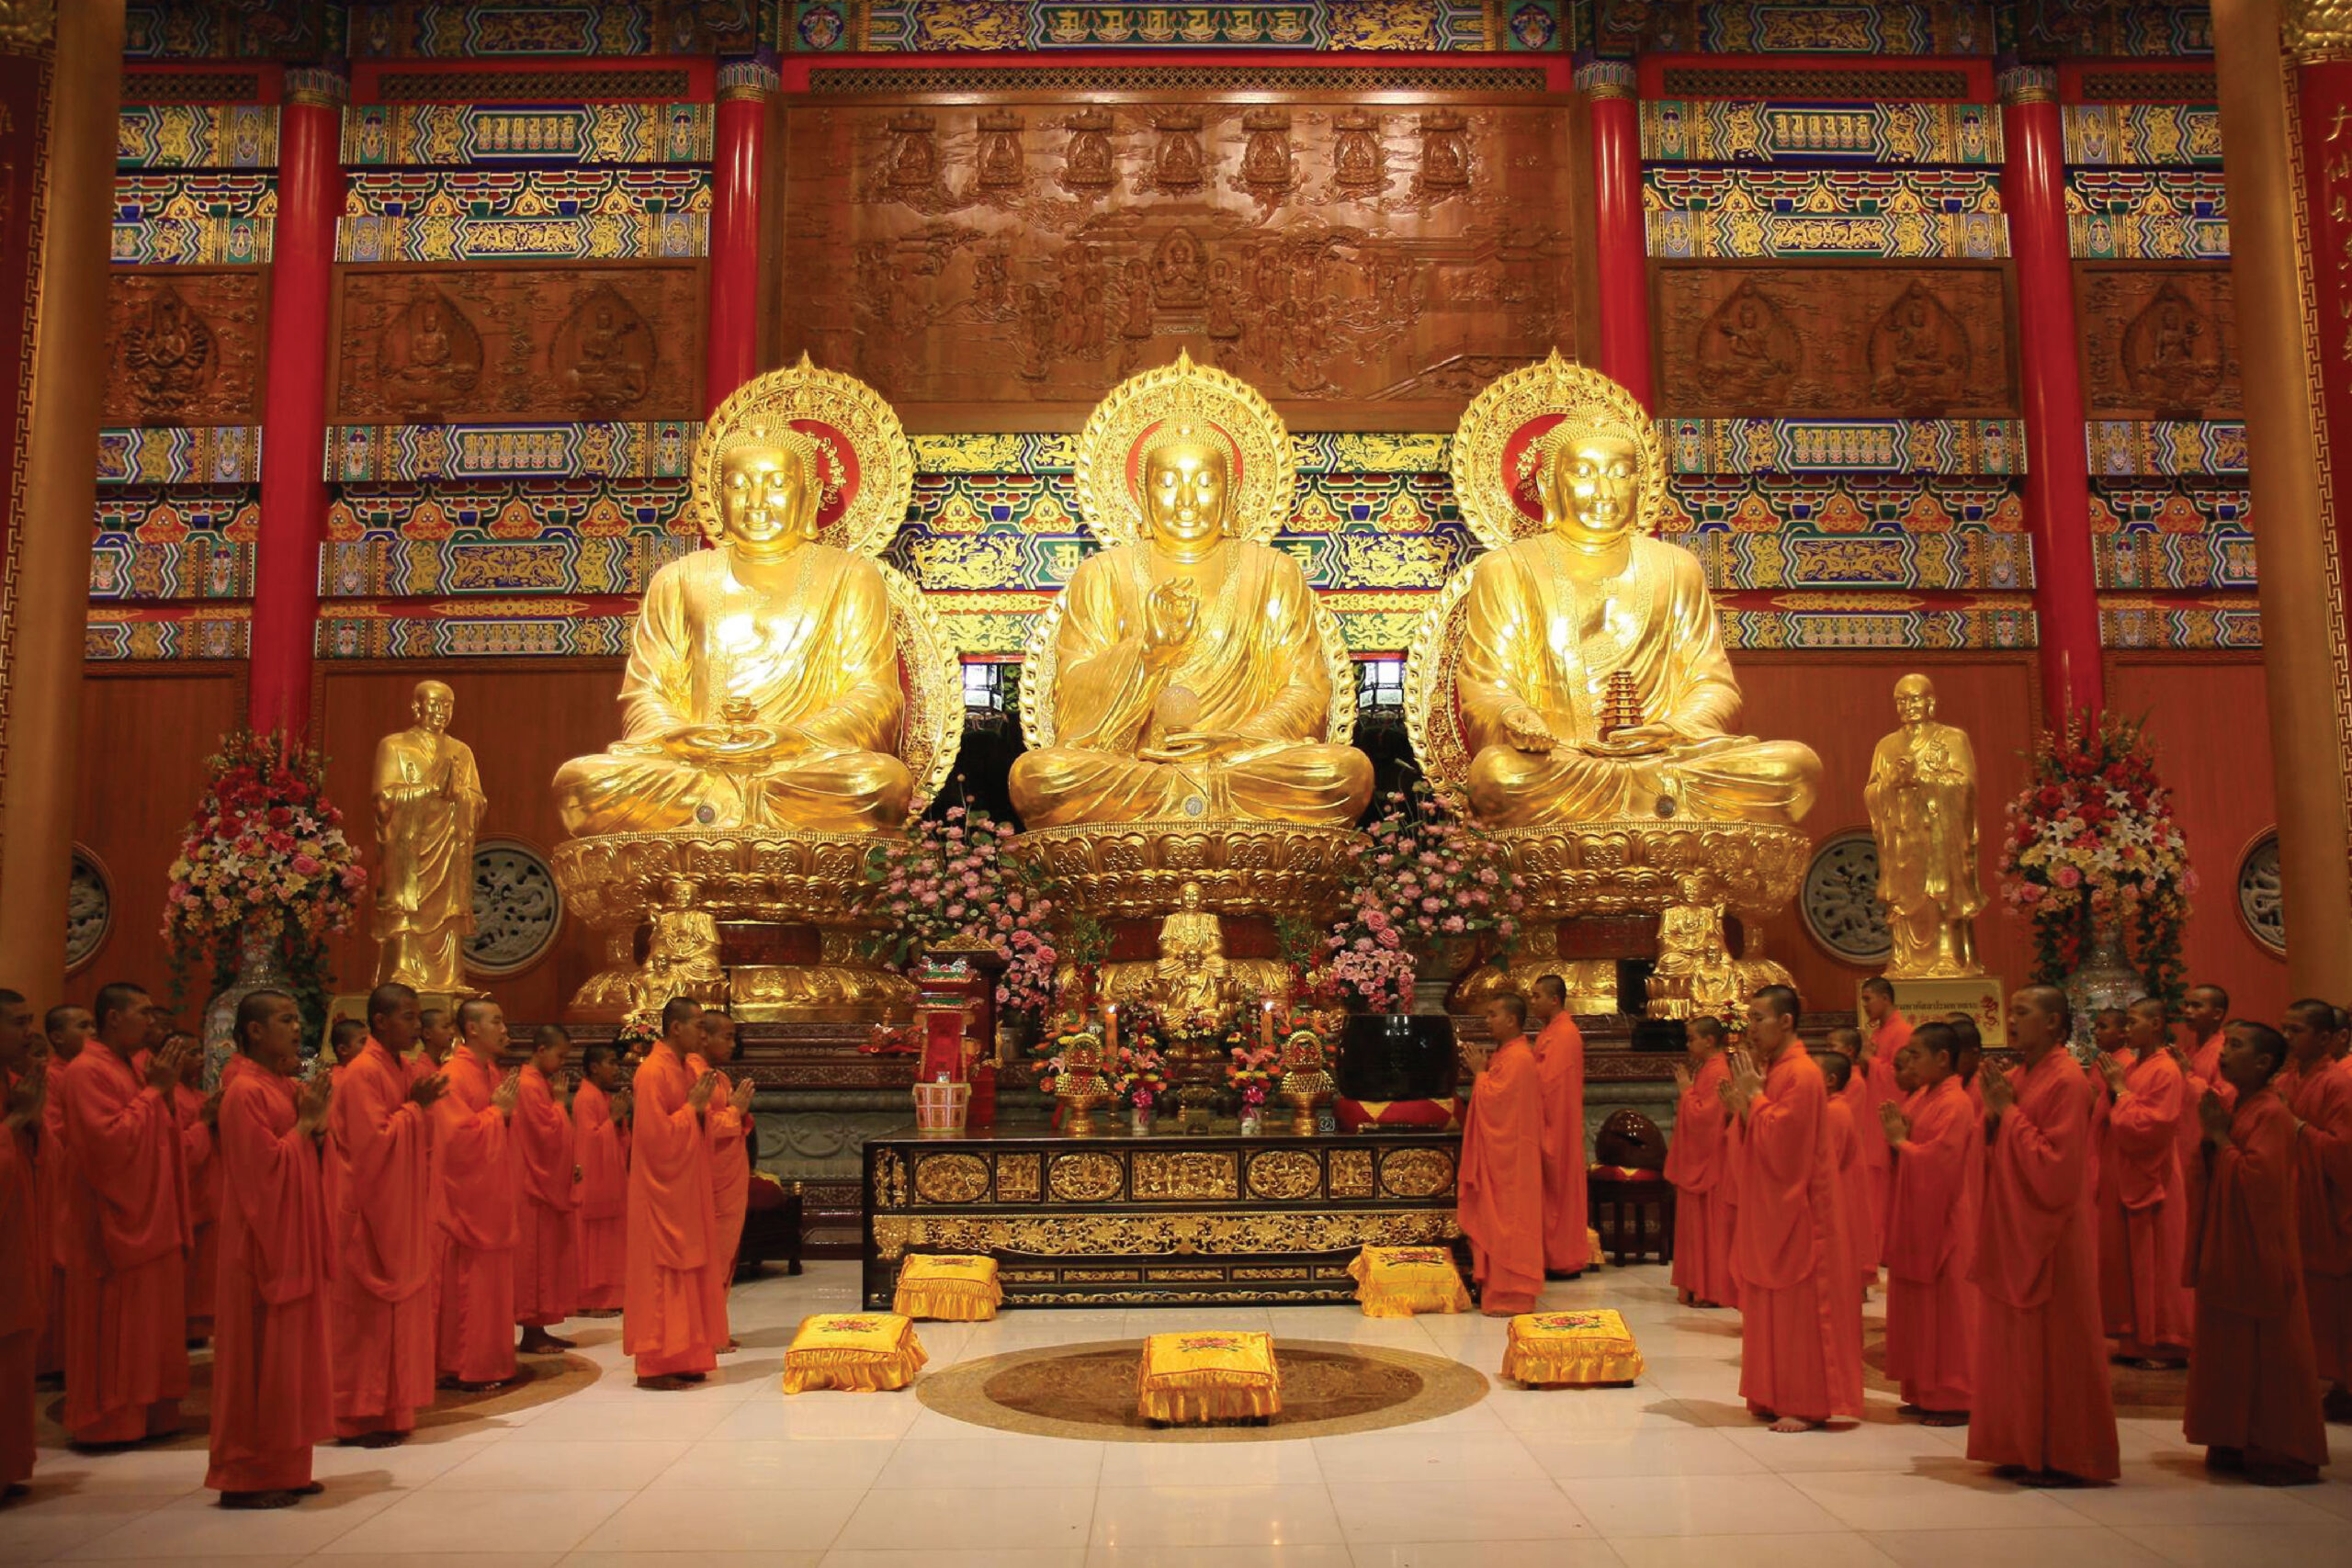 3. Borom Racha Kanchana Phisek Anusorn Temple - Nonthaburi